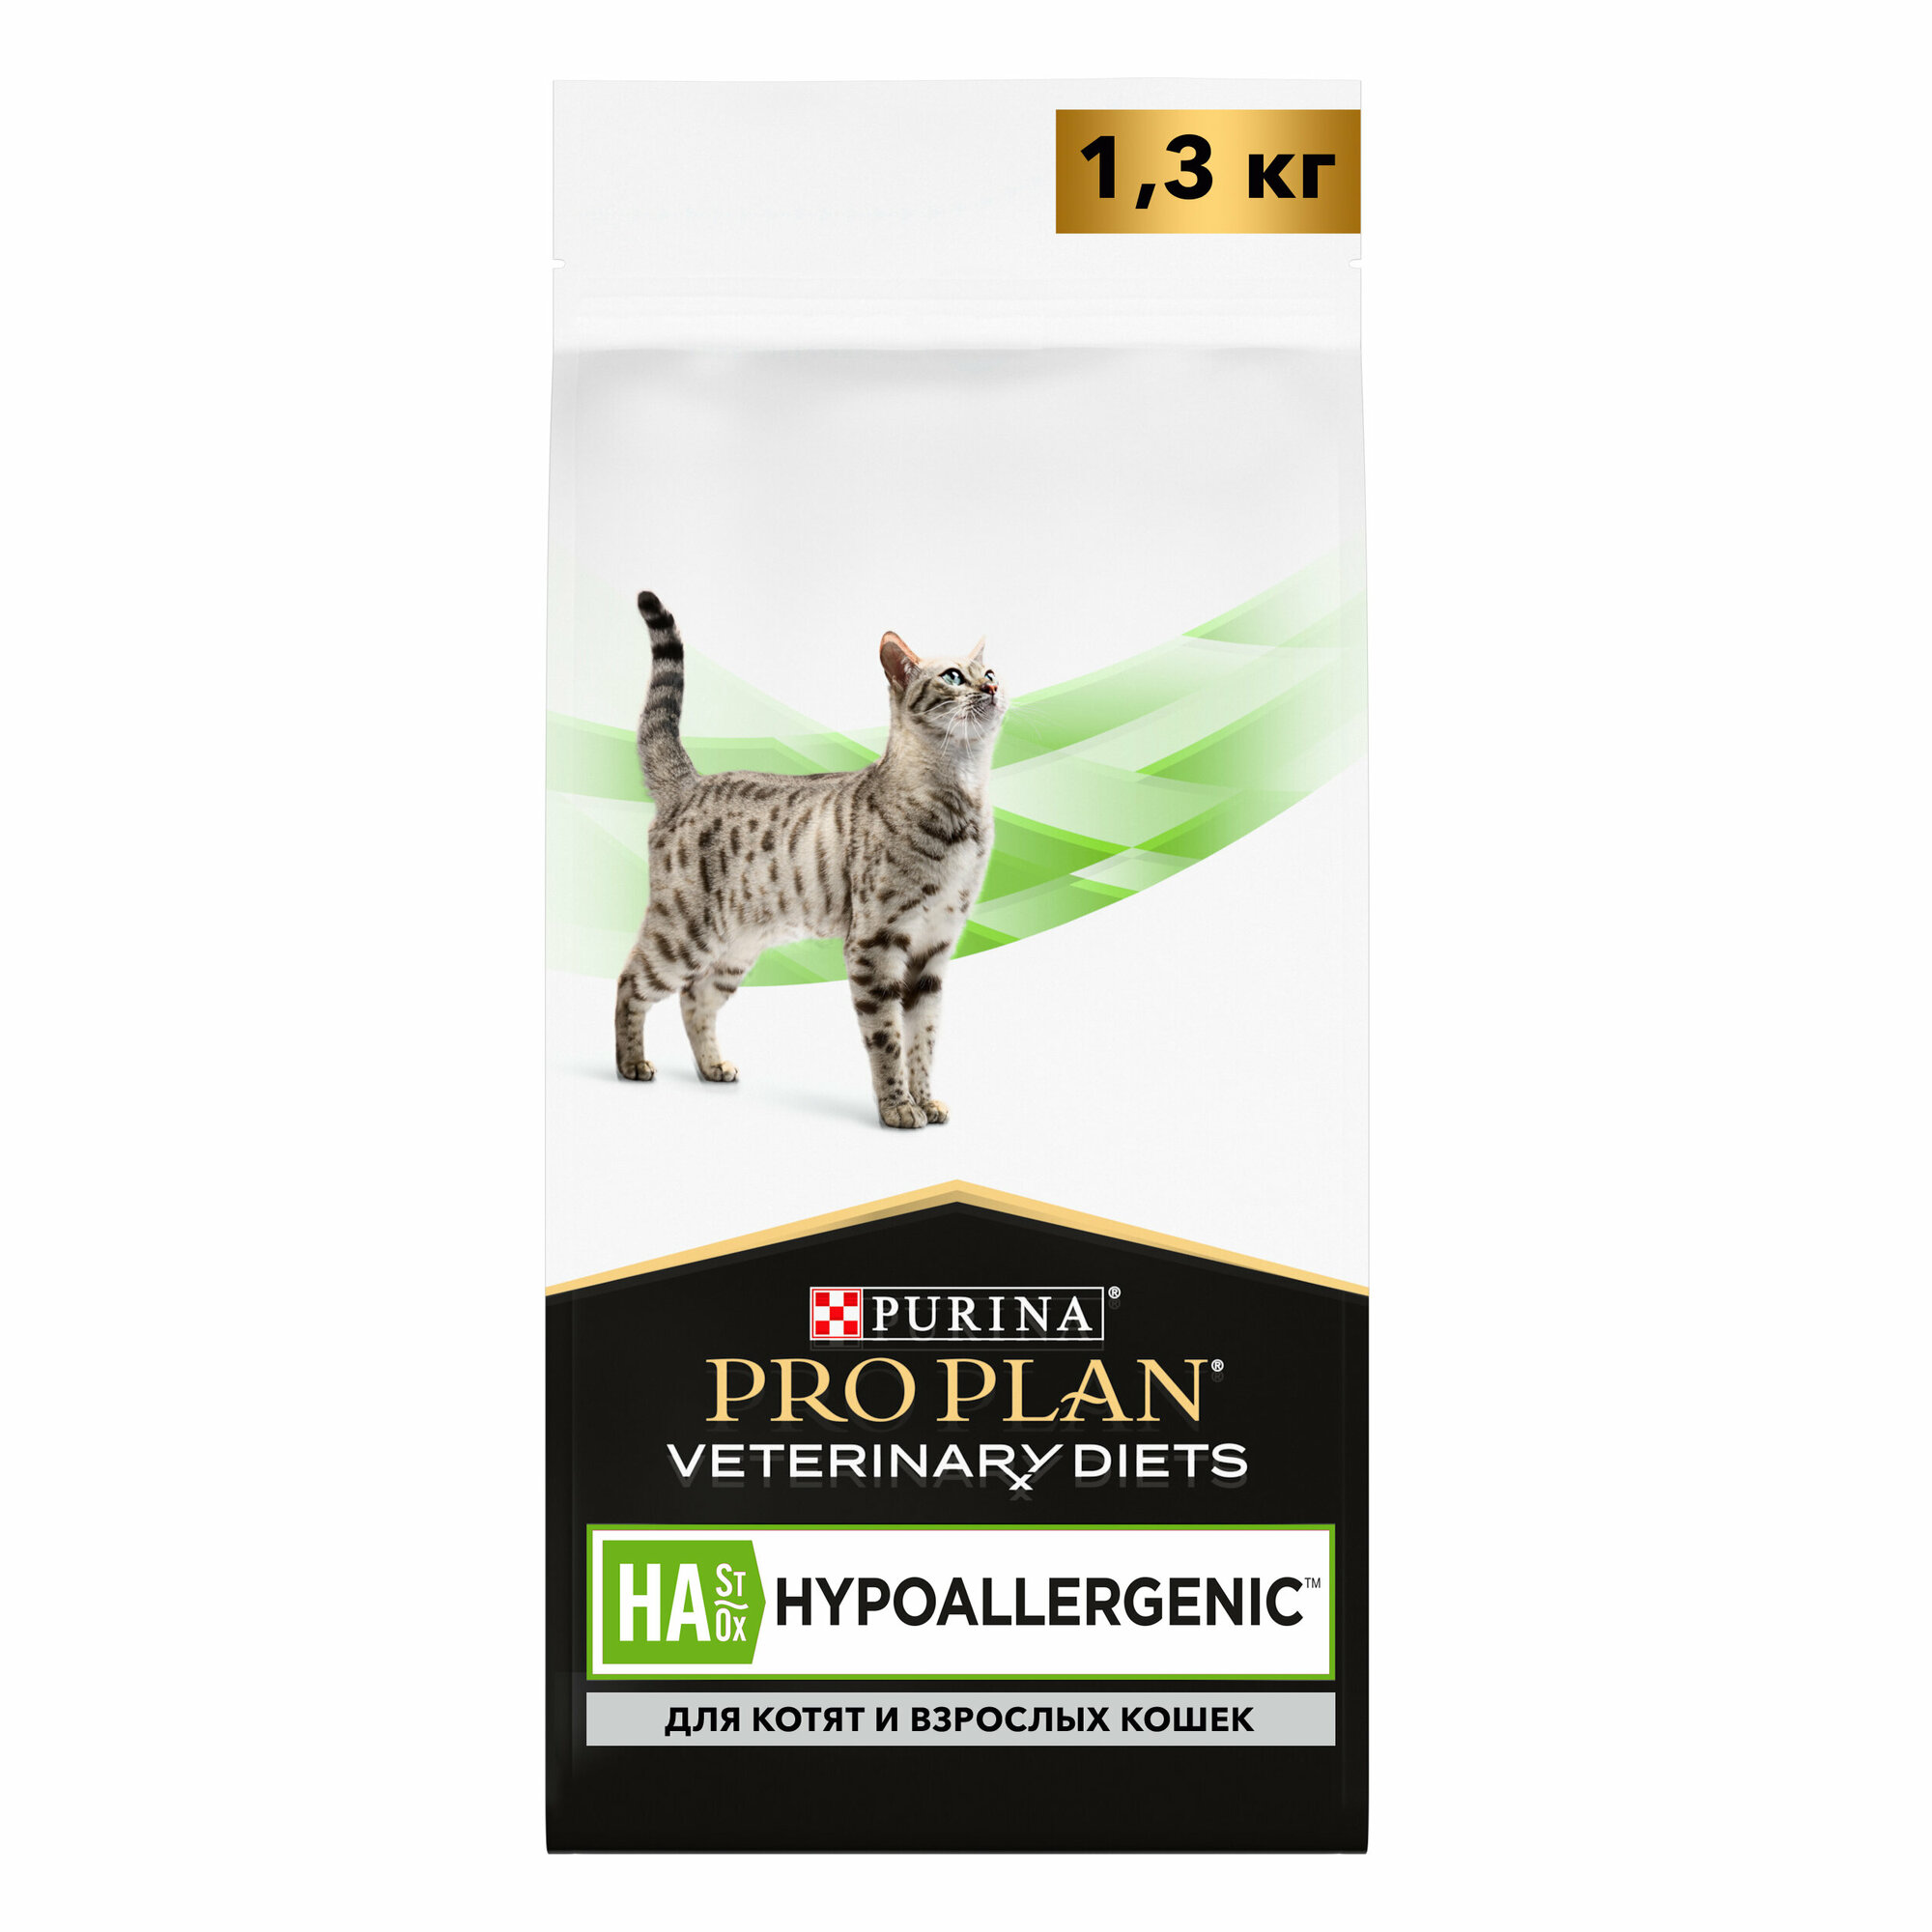 Сухой Корм Purina Pro Plan Veterinary Diets (HA) Hypoallergenic для кошек. Лечение и профилактика аллергии 1.3 кг